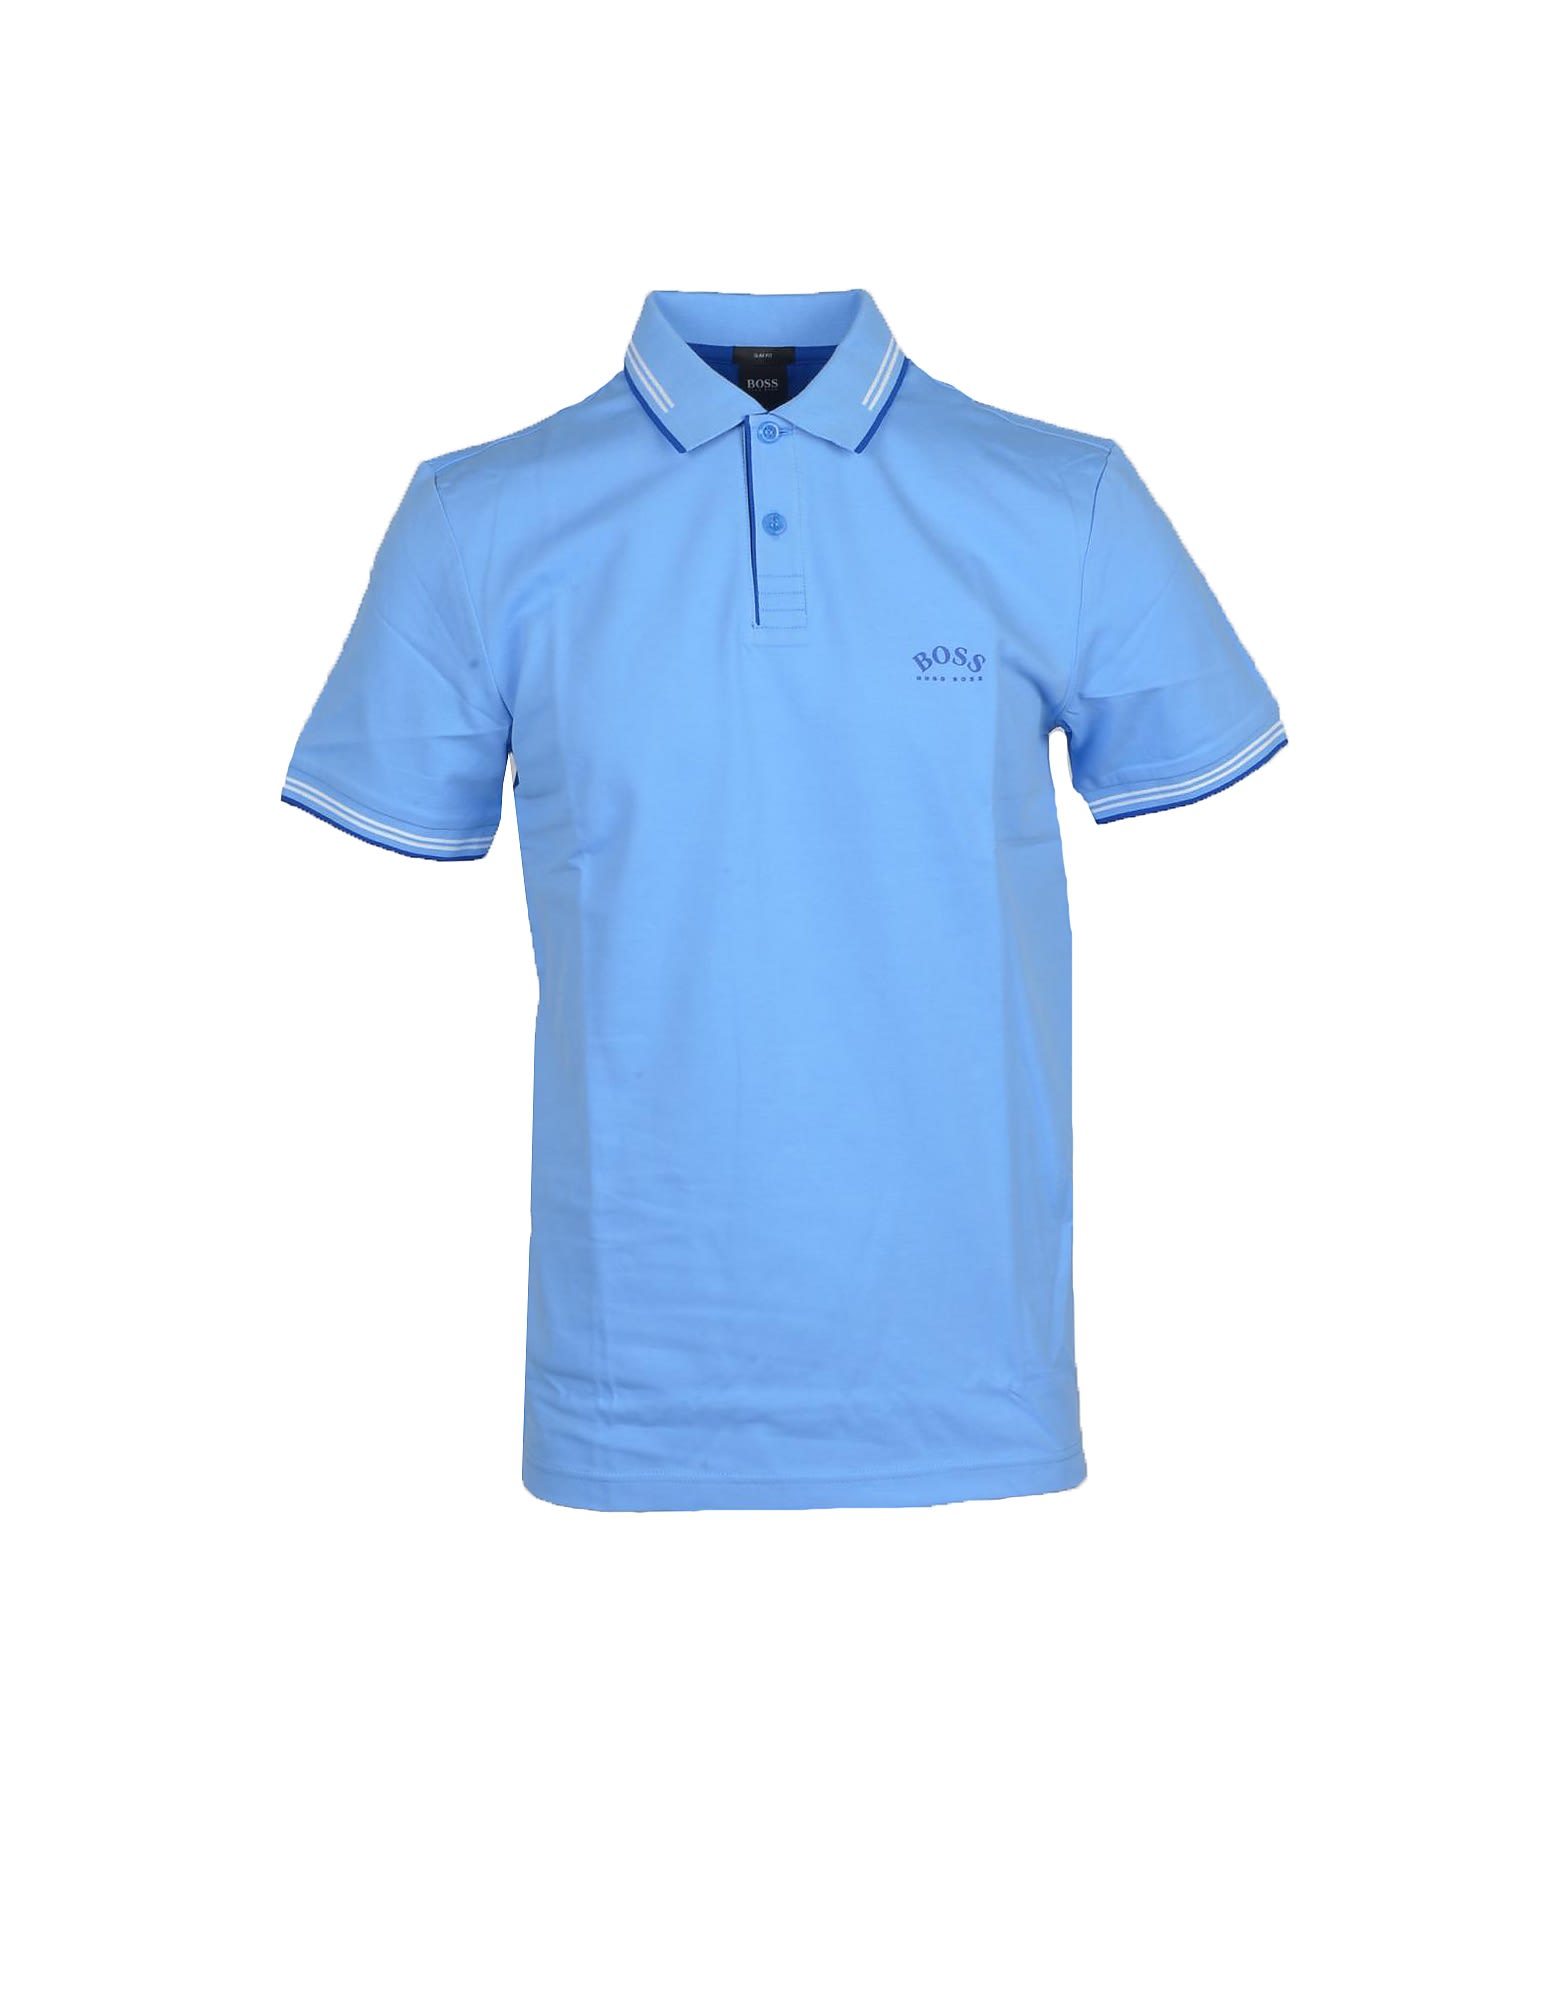 Hugo Boss Mens Light Blue Shirt